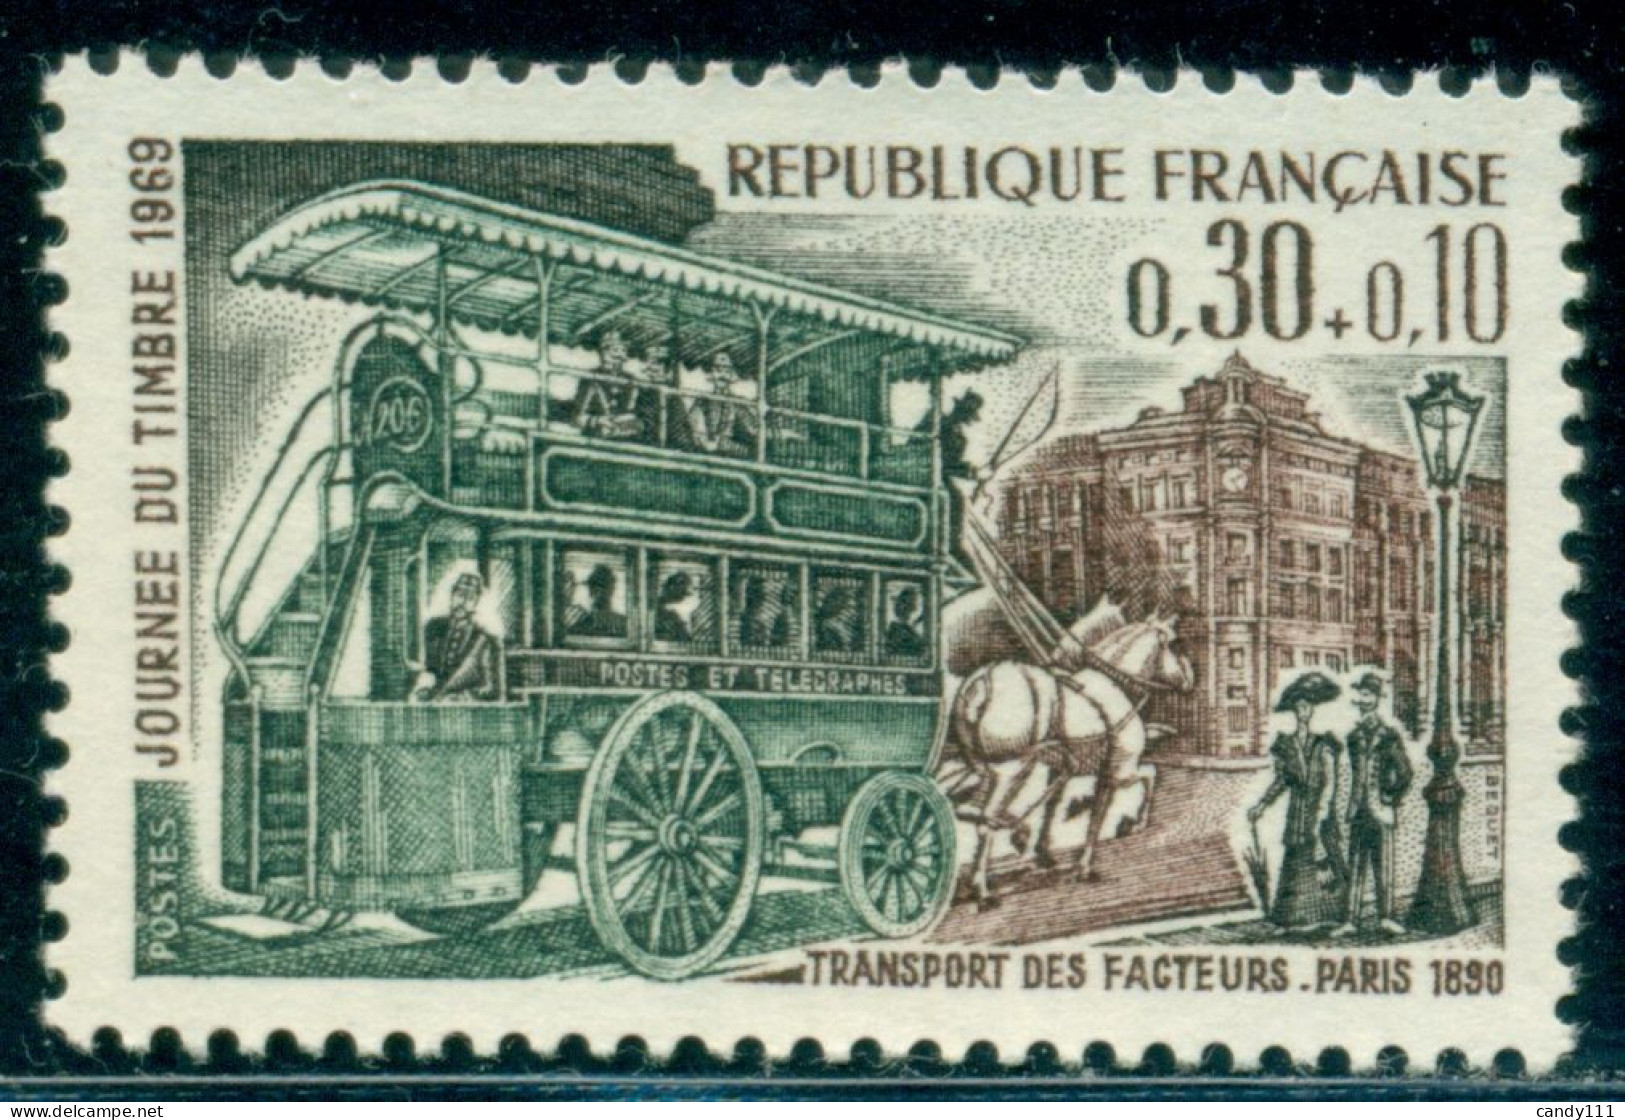 1969 Double-decker Postman Bus, Used In Paris Around 1890,France,1659 ,MNH - Bussen